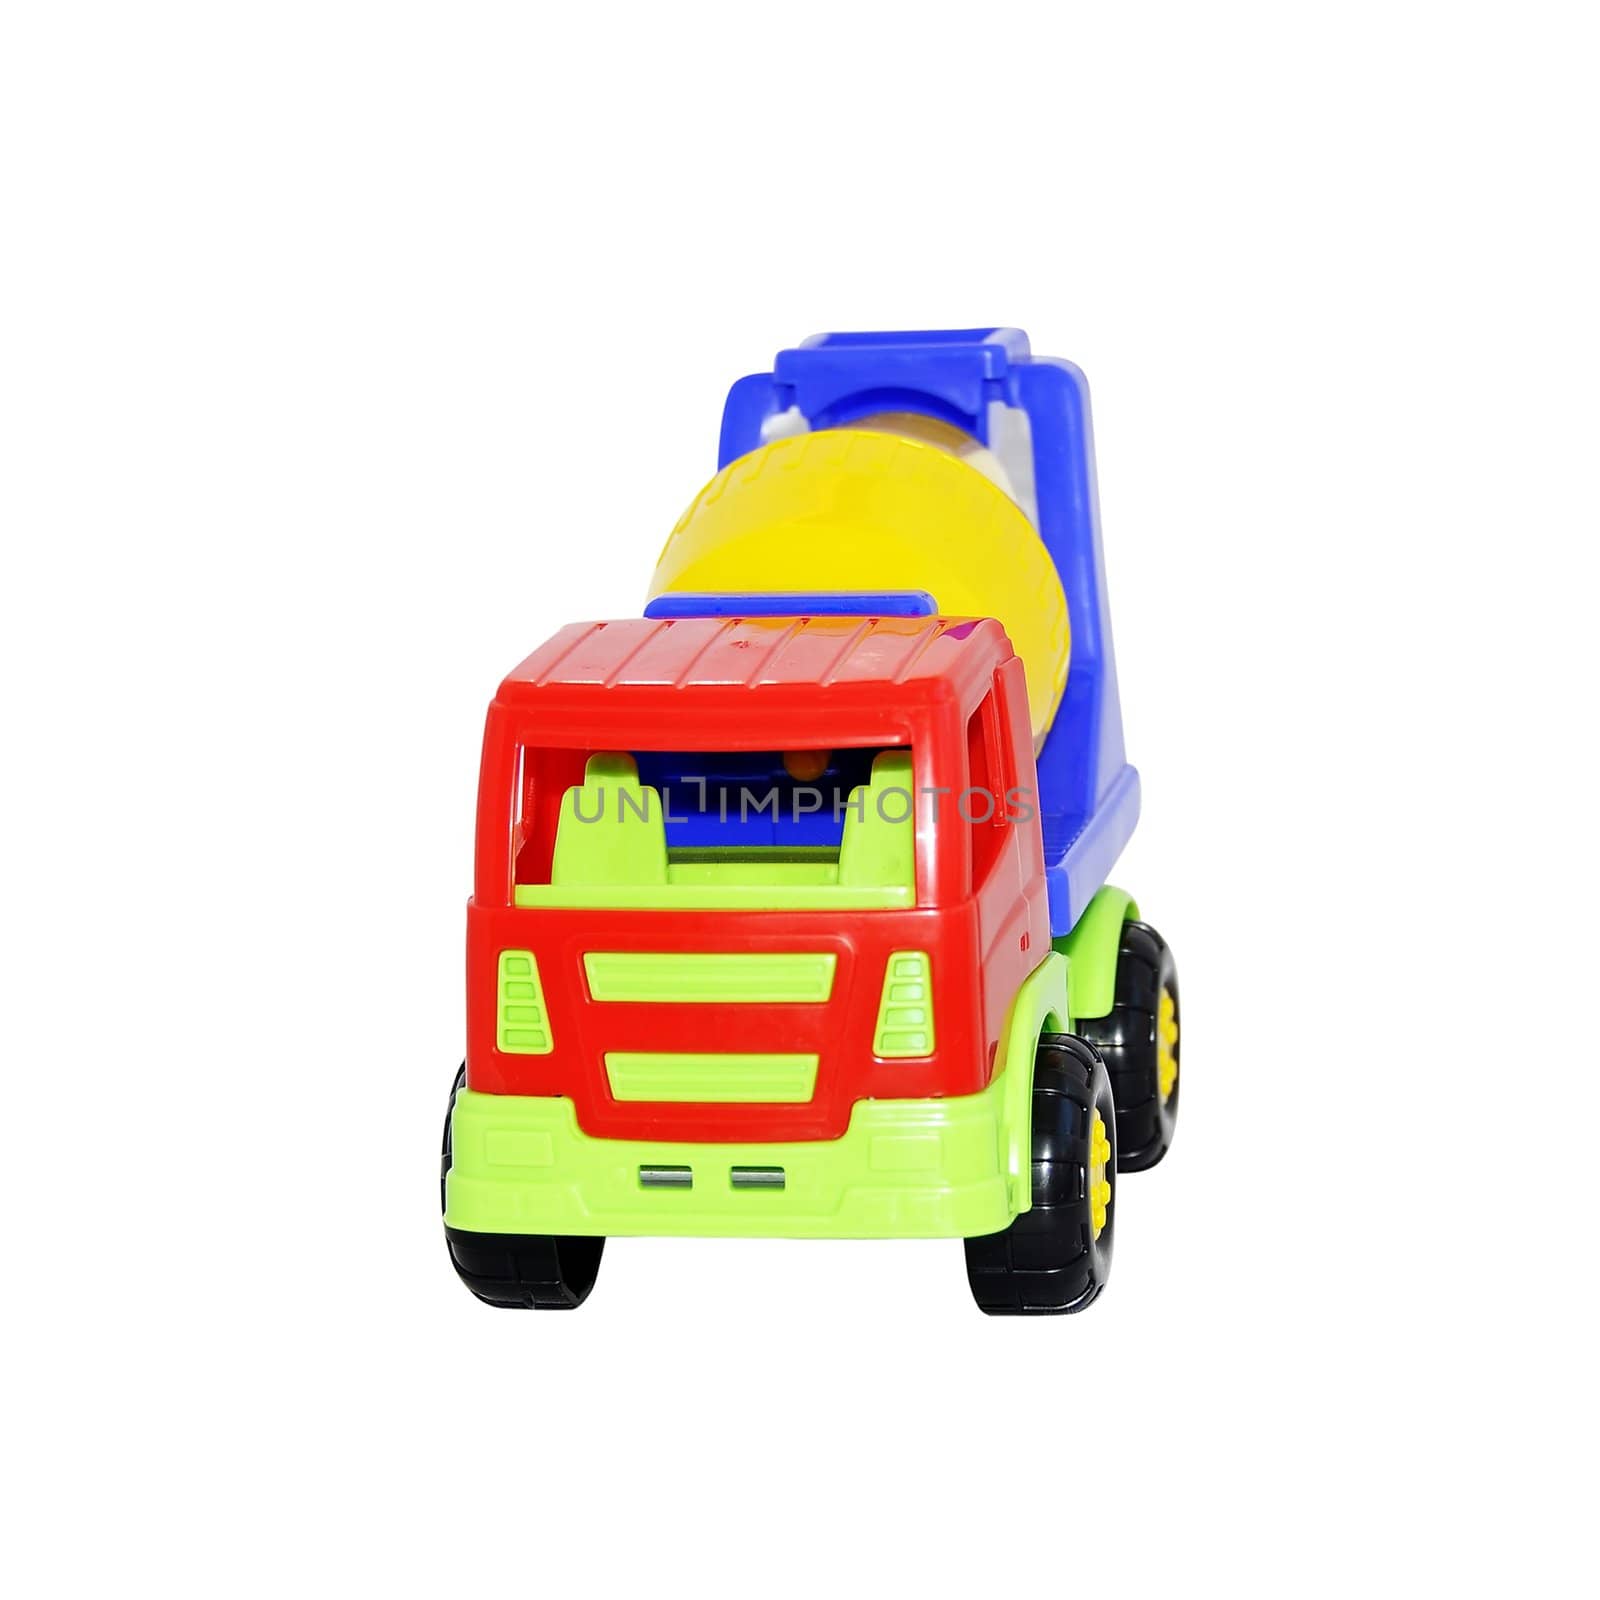 Toy Car by alena0509